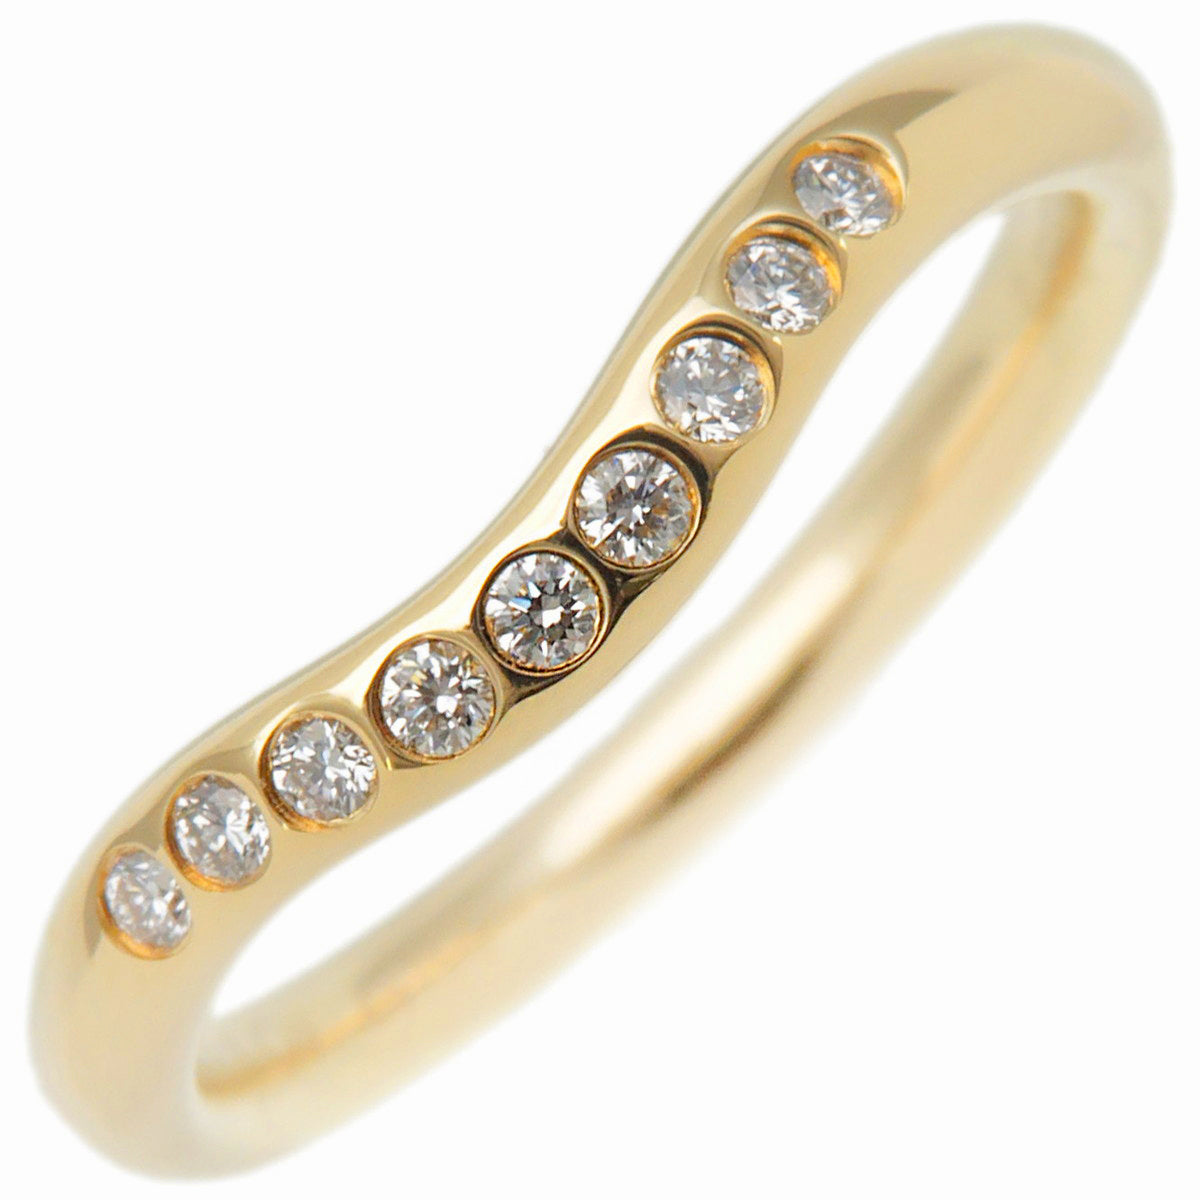 Tiffany&Co. Curved Band Ring 9P Diamond Yellow Gold US4 EU46.5